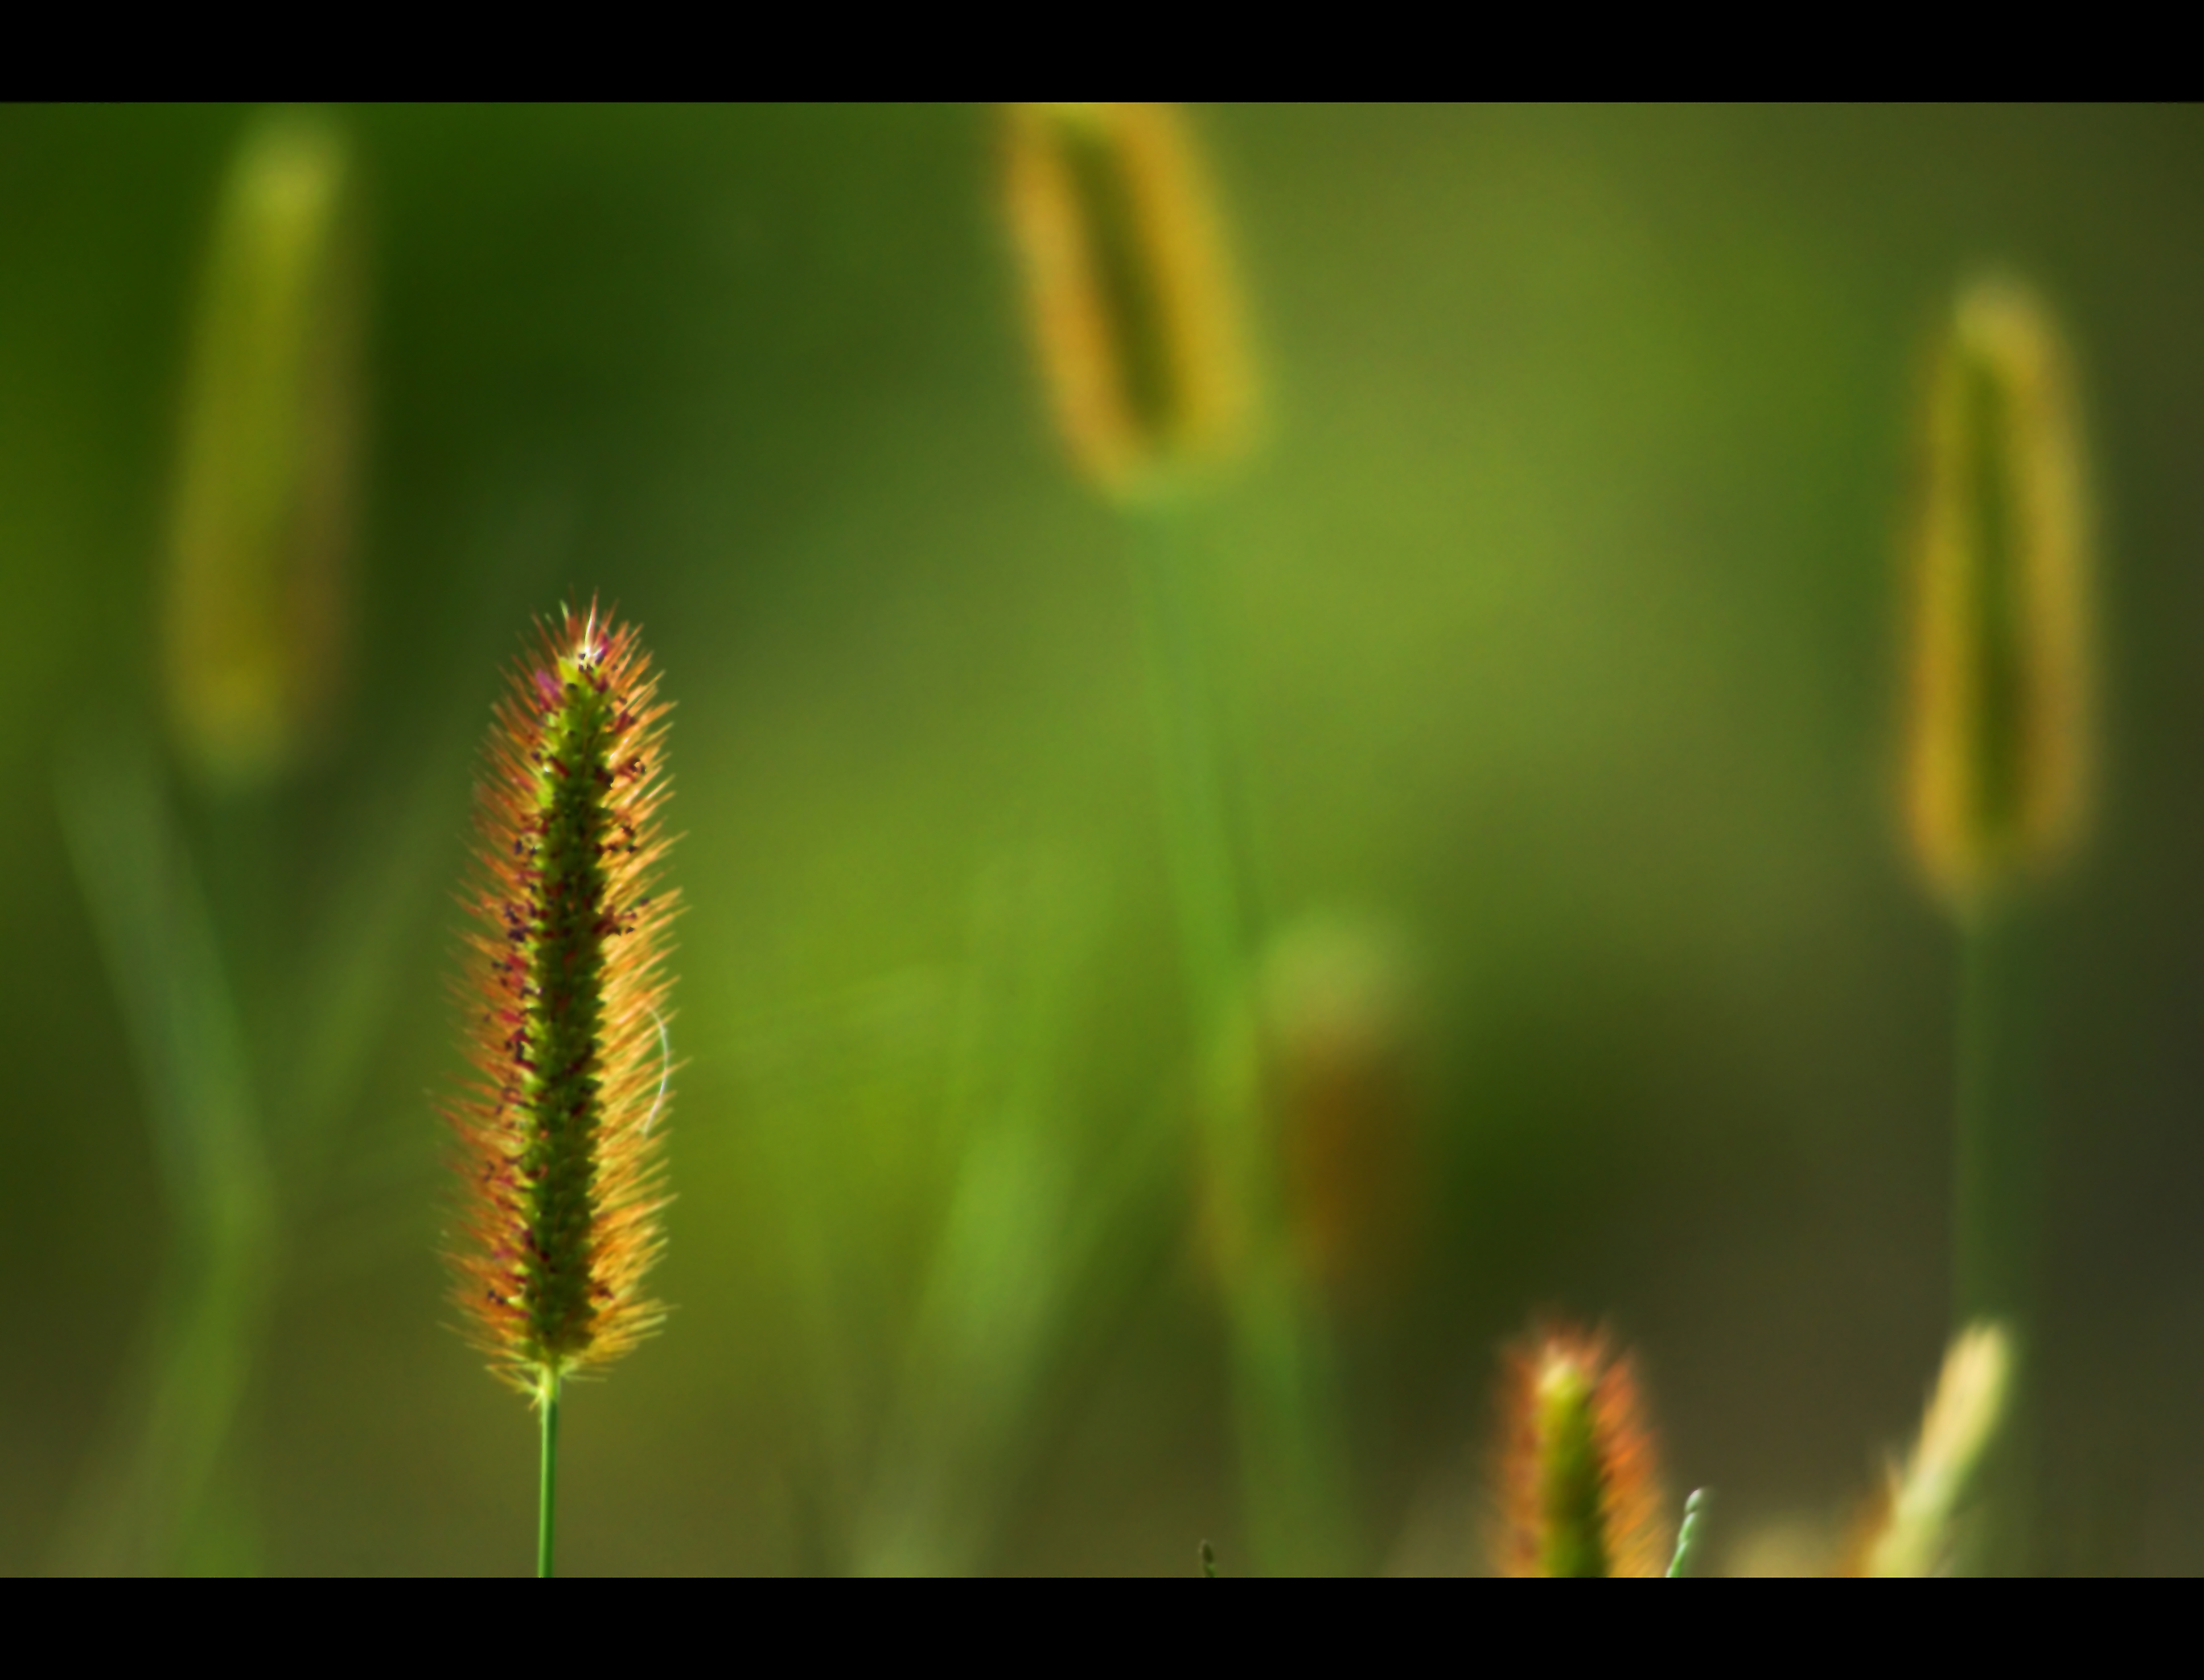 Grass, Abstract, Natural, Green, Lawn, HQ Photo